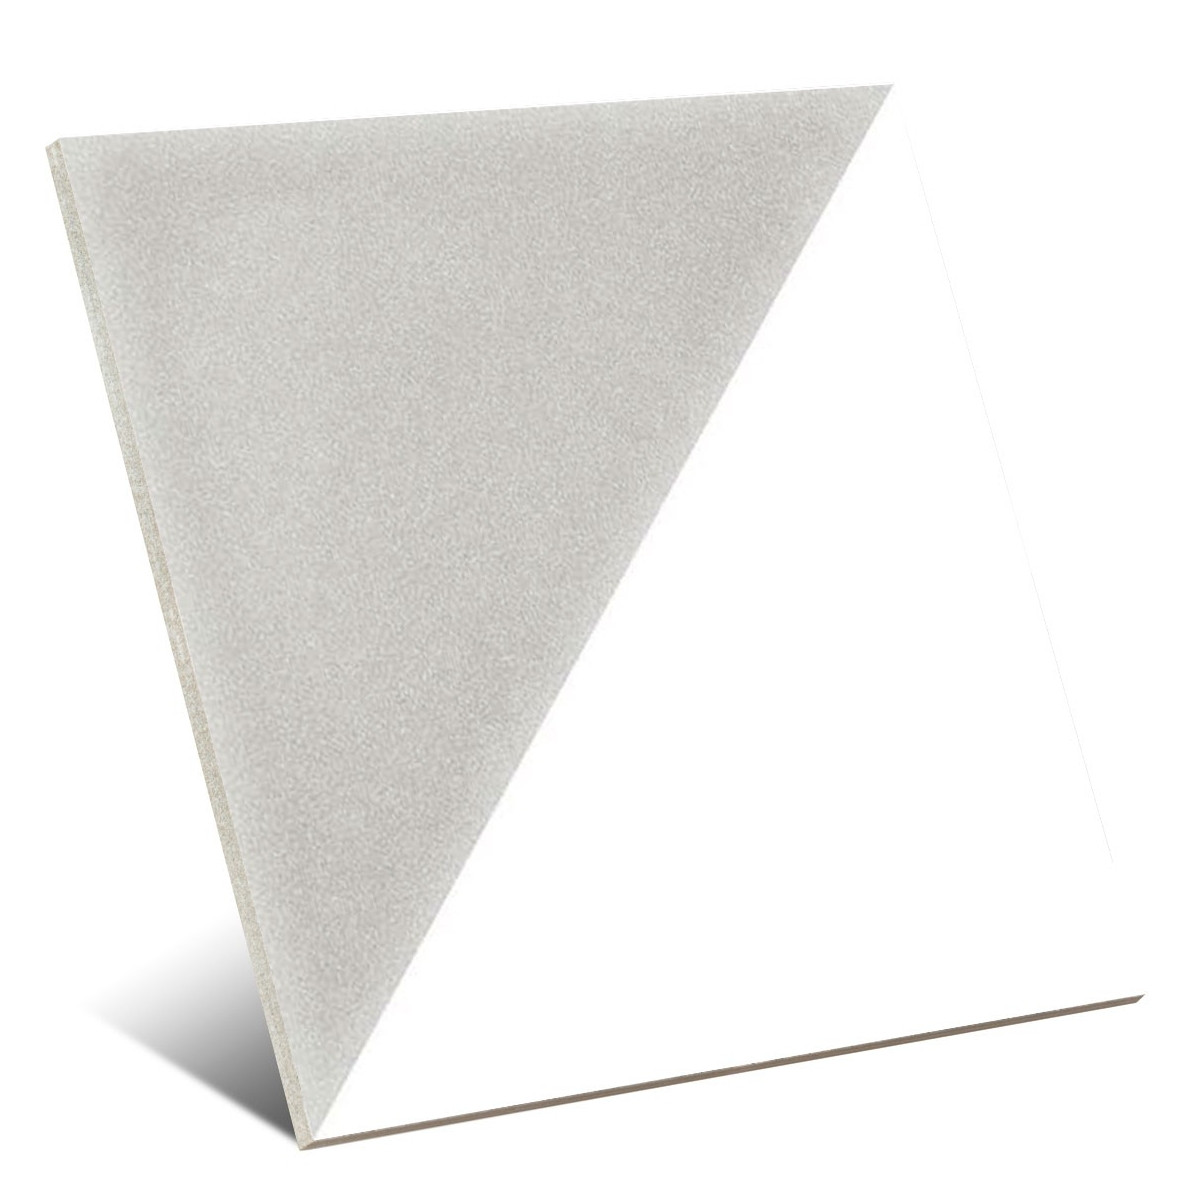 Carrelage scandinave triangulaire gris 20x20 cm SCANDY Humo R10 - 1m² - 2